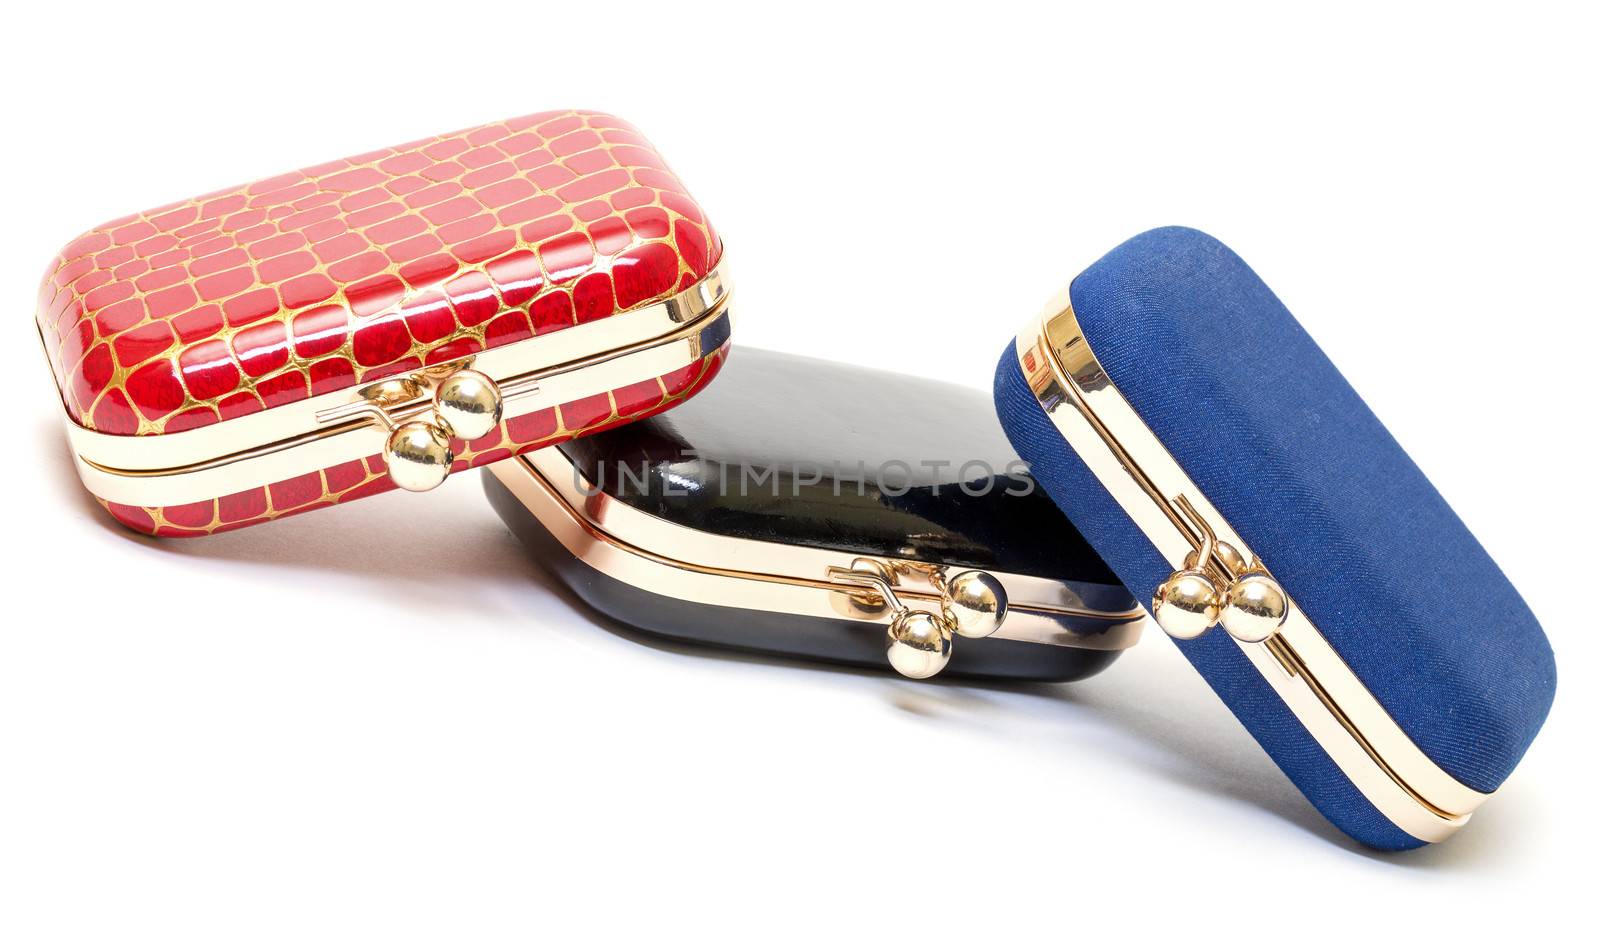 Fashionable female handbags by Discovod